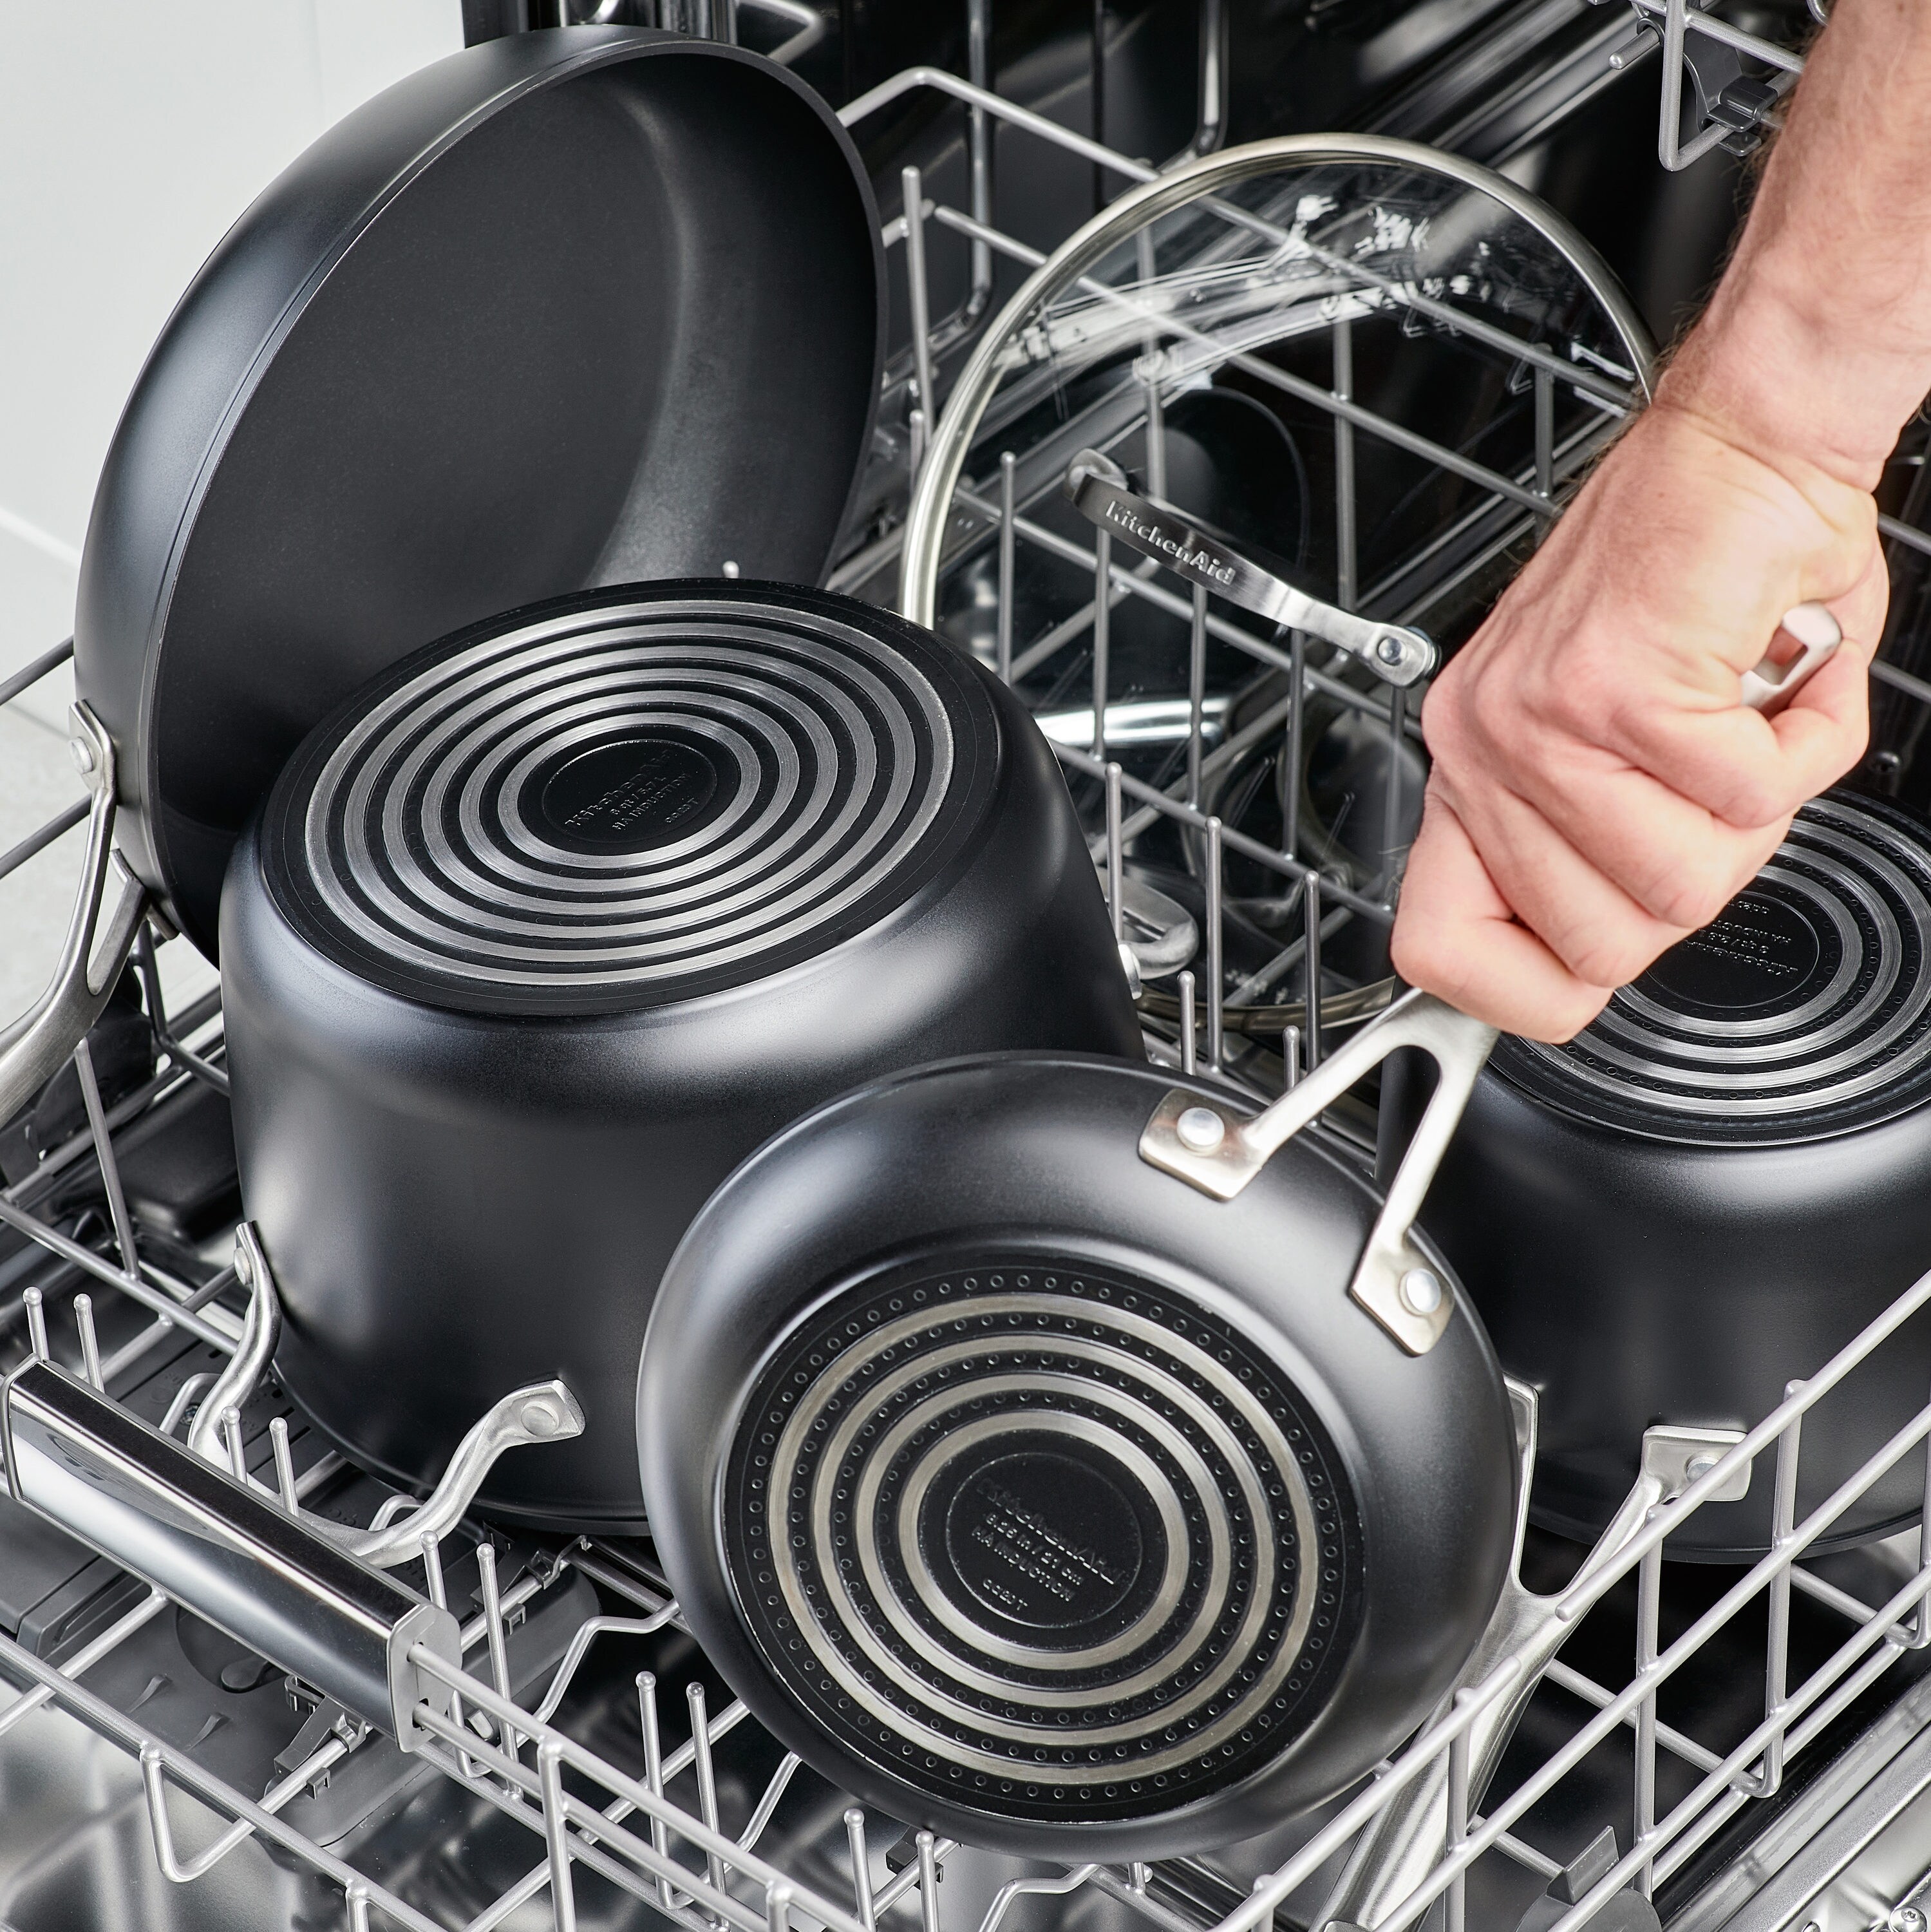 Kitchenaid 1.5-quart Colander, White with Black Accents, Dishwasher Safe